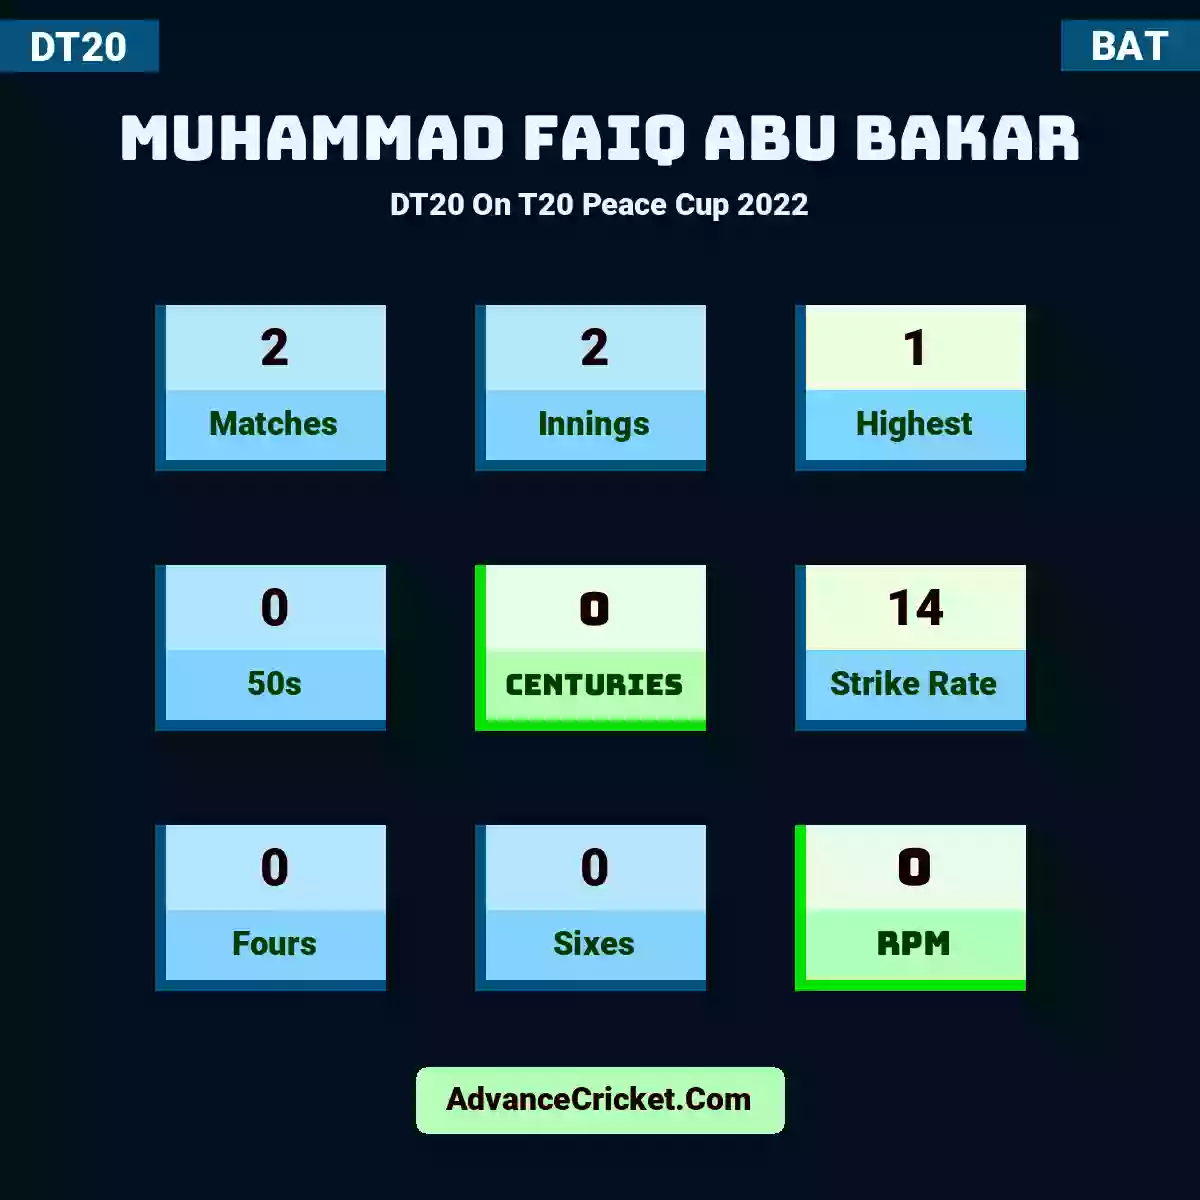 Muhammad Faiq Abu Bakar DT20  On T20 Peace Cup 2022, Muhammad Faiq Abu Bakar played 2 matches, scored 1 runs as highest, 0 half-centuries, and 0 centuries, with a strike rate of 14. M.Faiq.Abu.Bakar hit 0 fours and 0 sixes, with an RPM of 0.